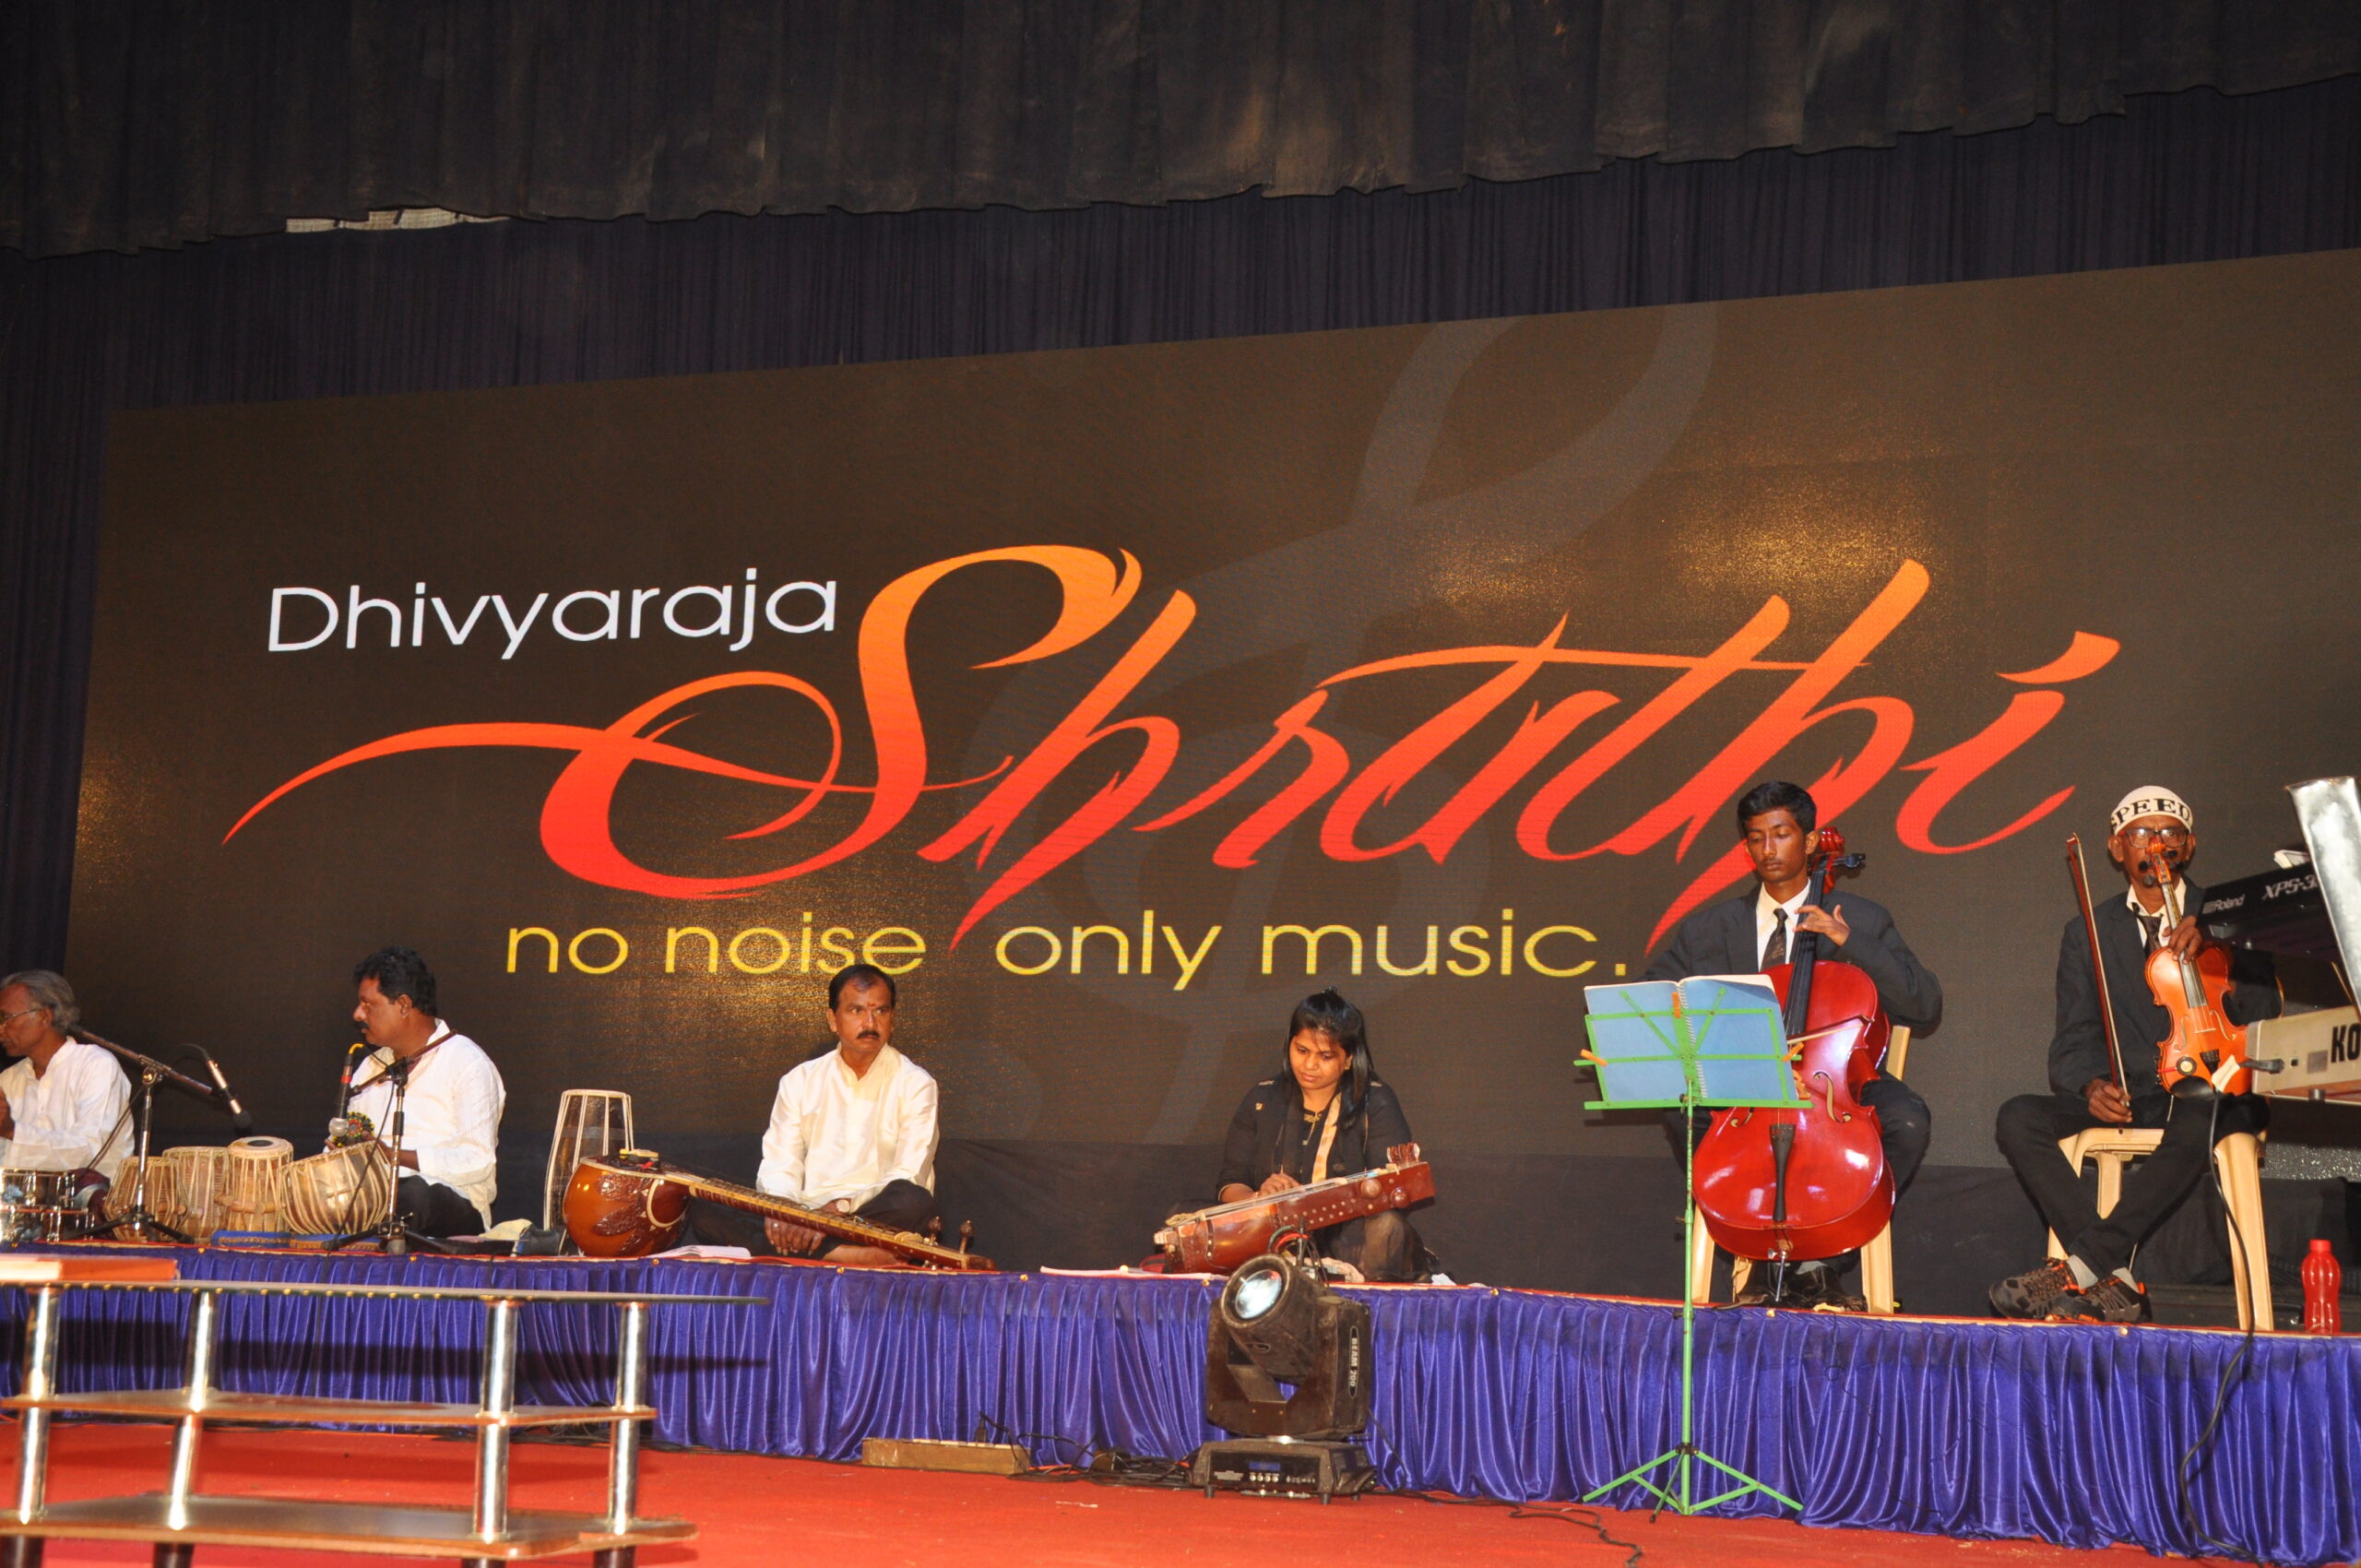 Dhivyaraja shruthi orchestra in chennai